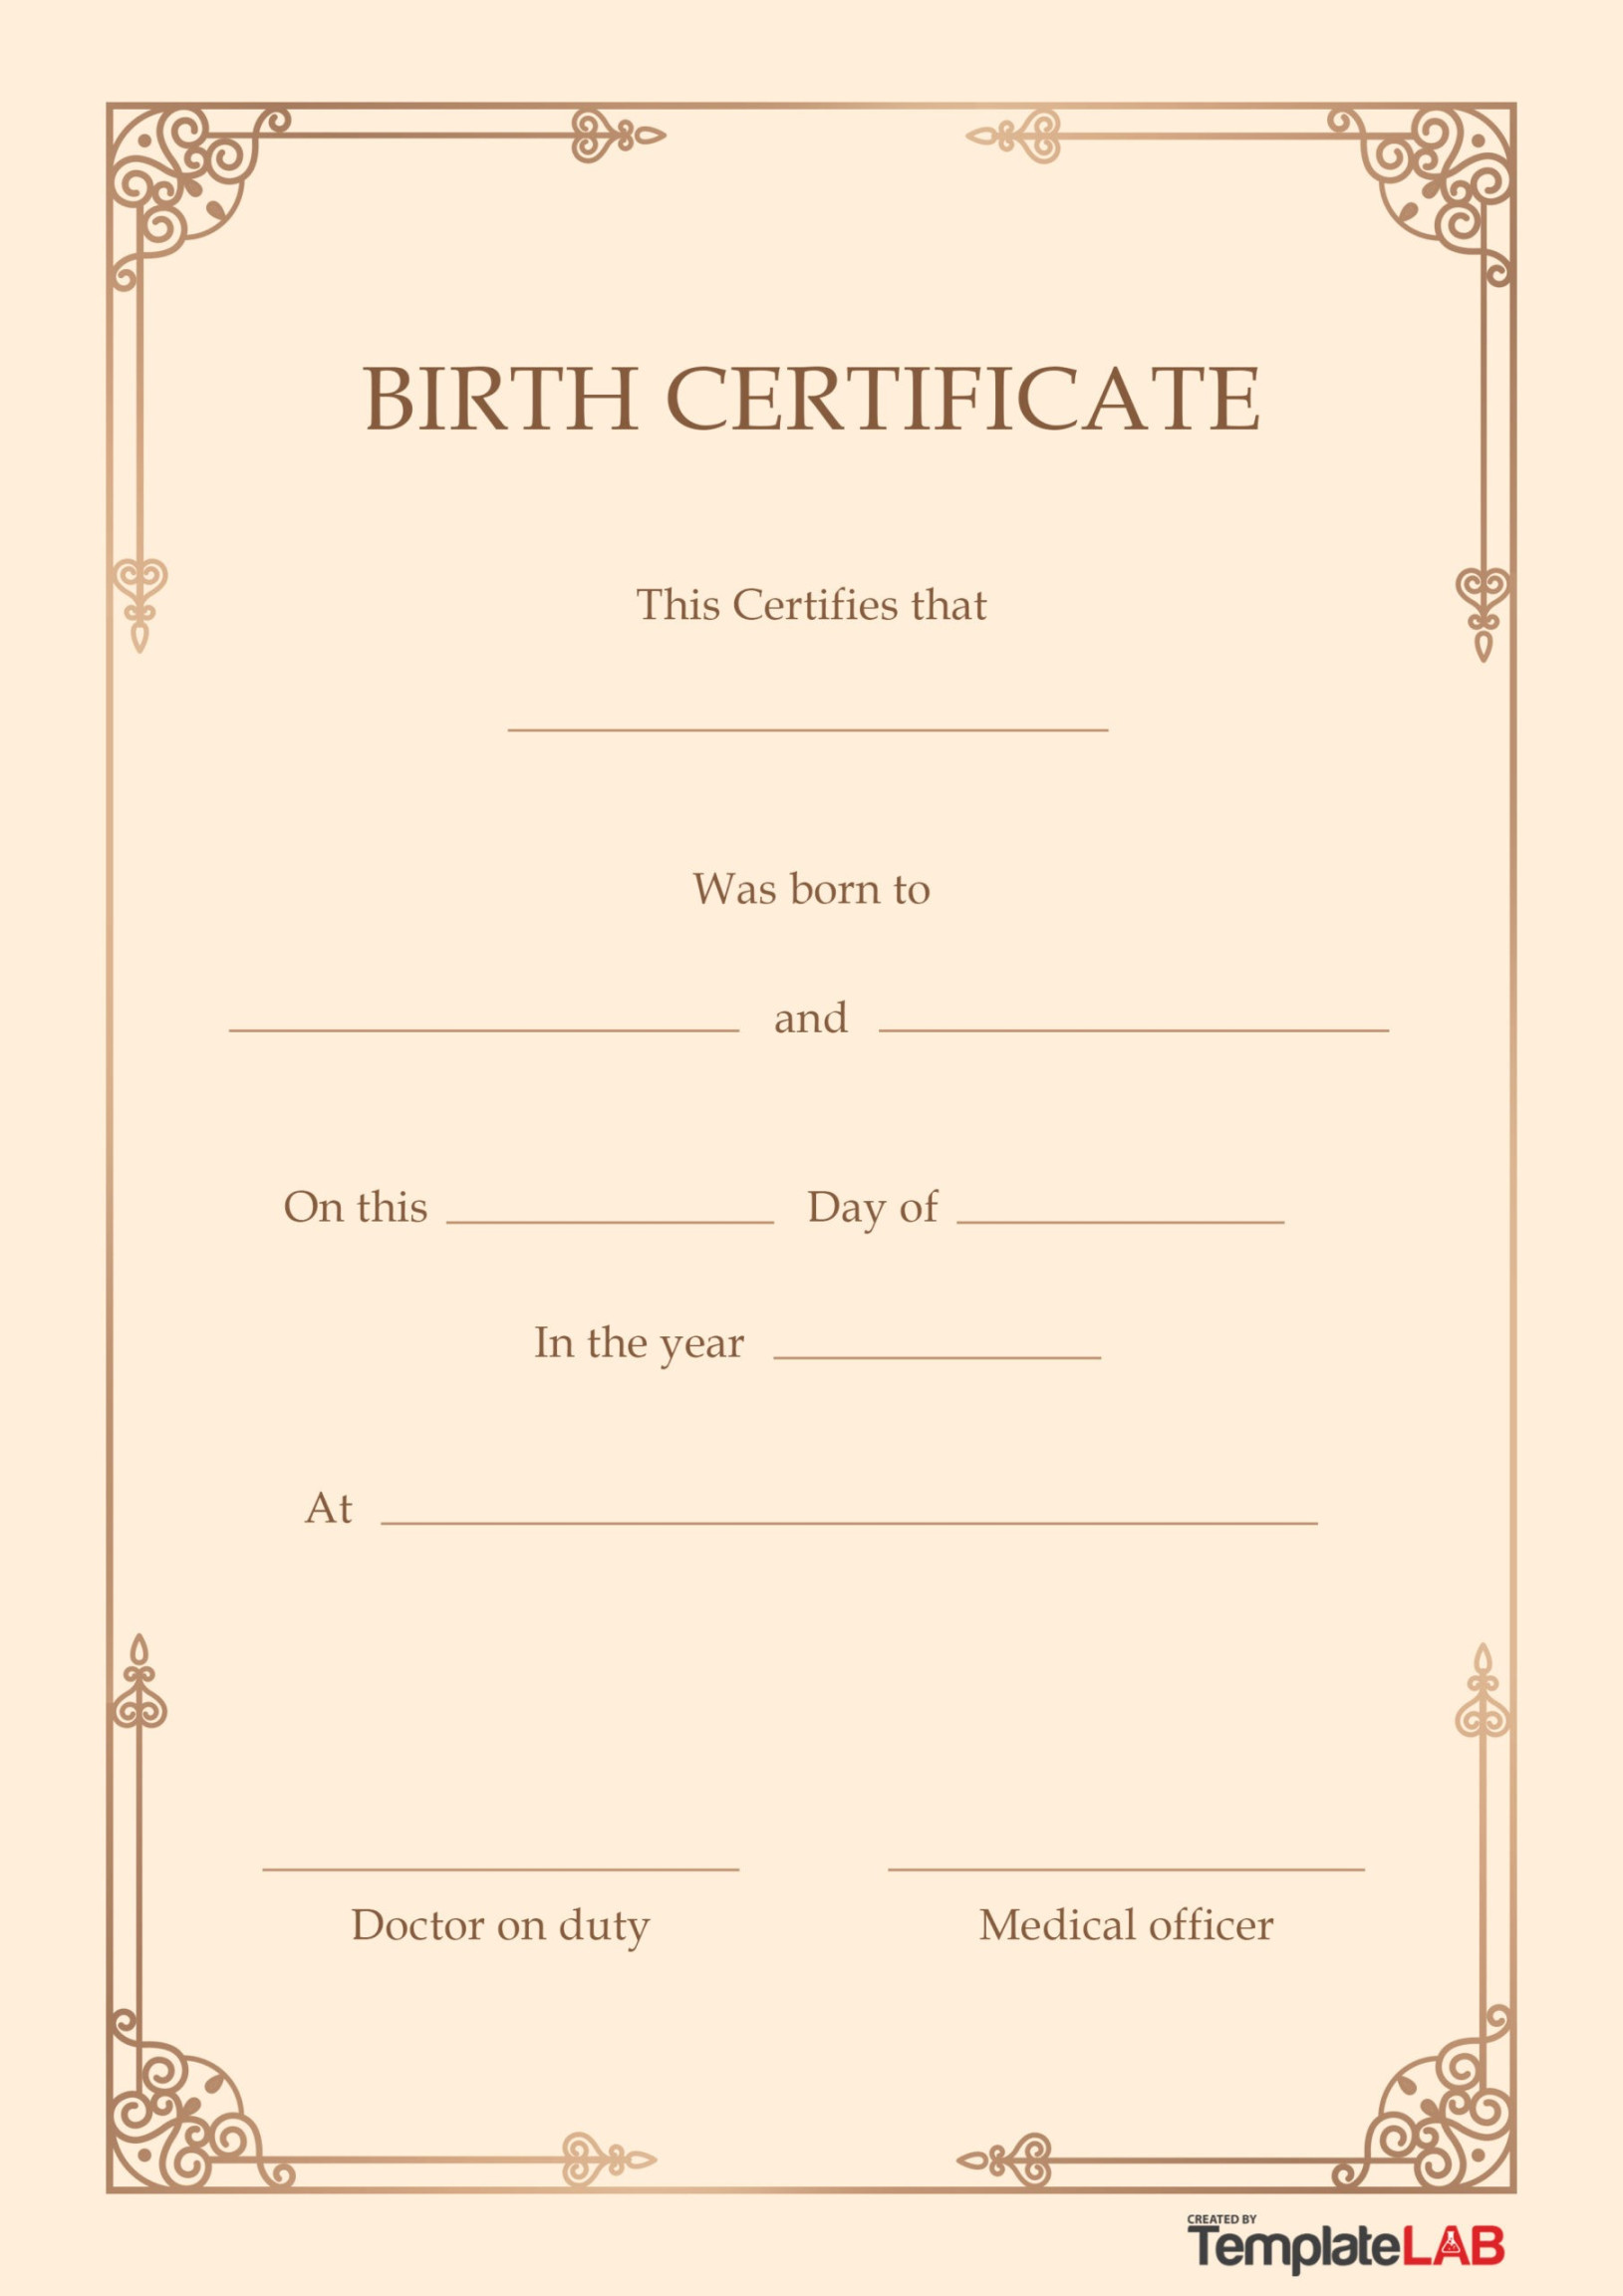 Birth Certificate Templates (Word, PPT & PDF) ᐅ TemplateLab